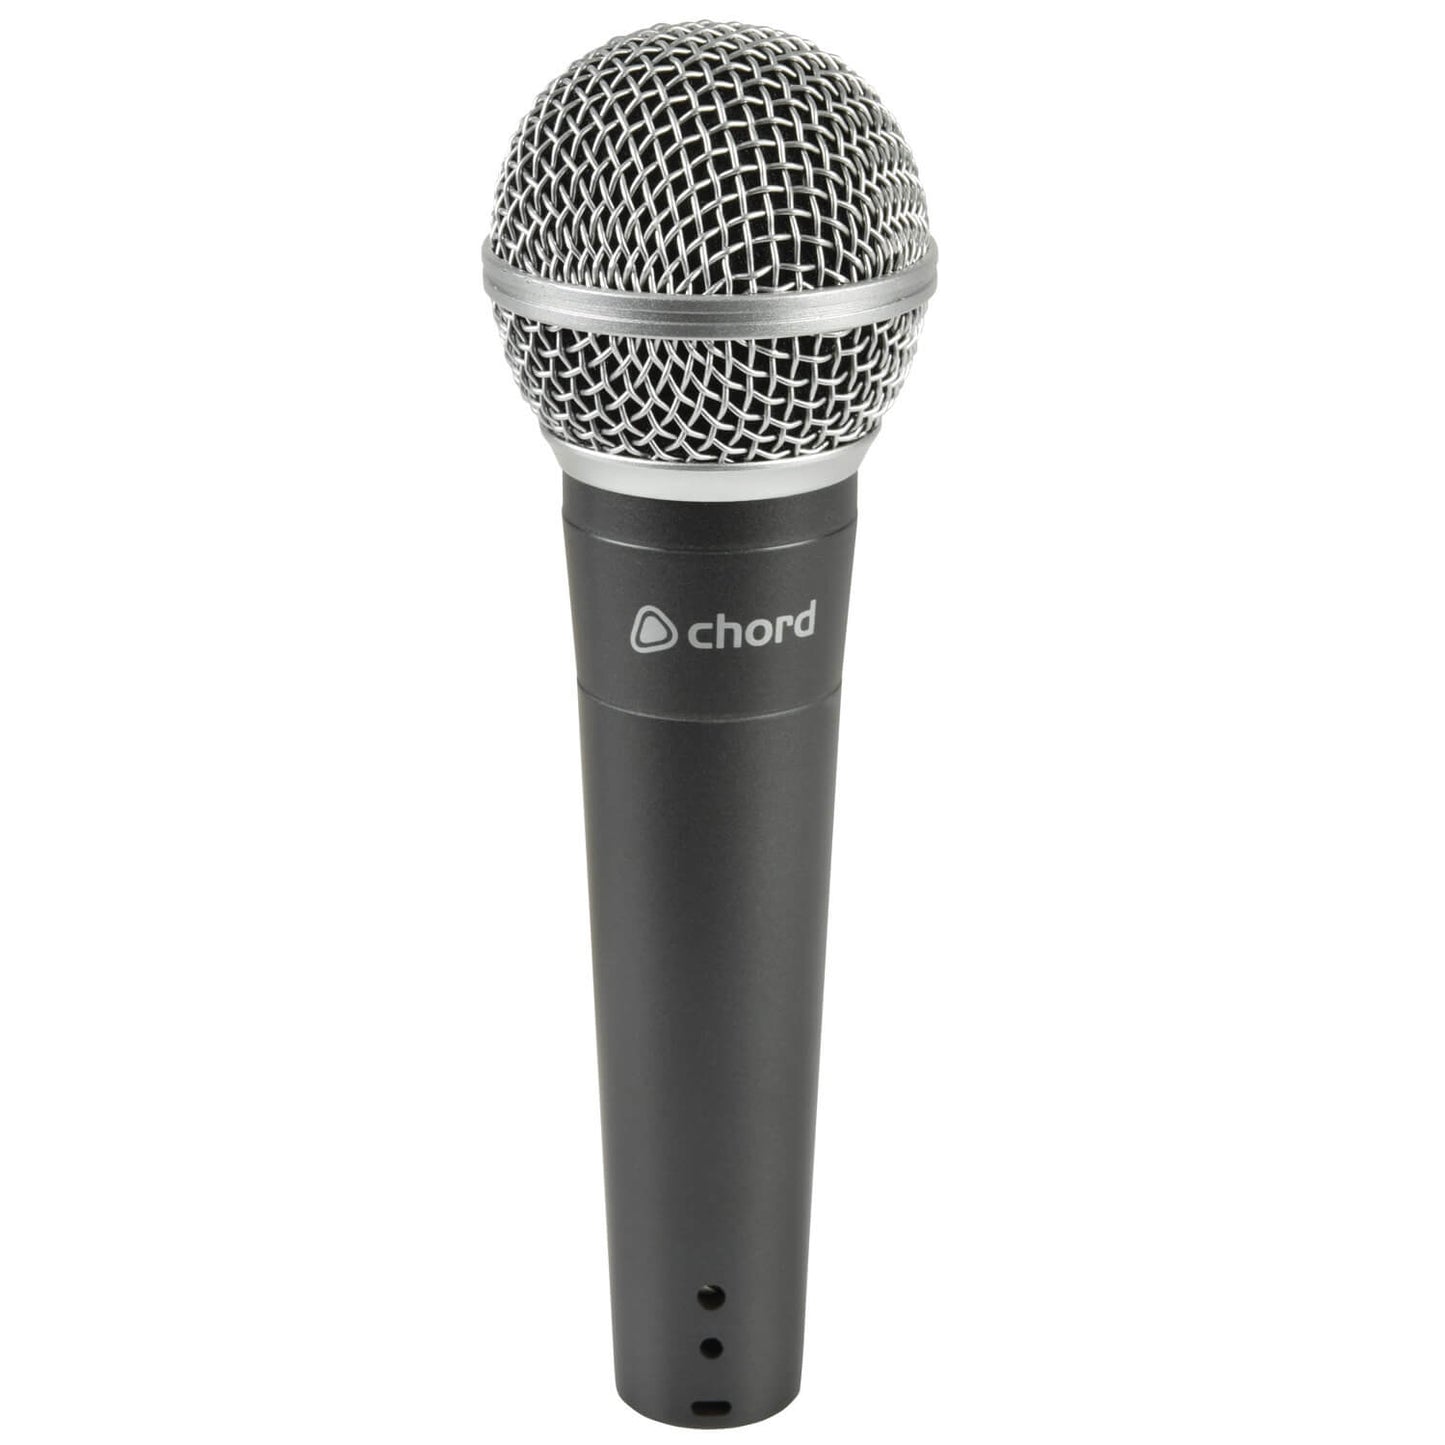 Chord DM02 Dynamic Microphone